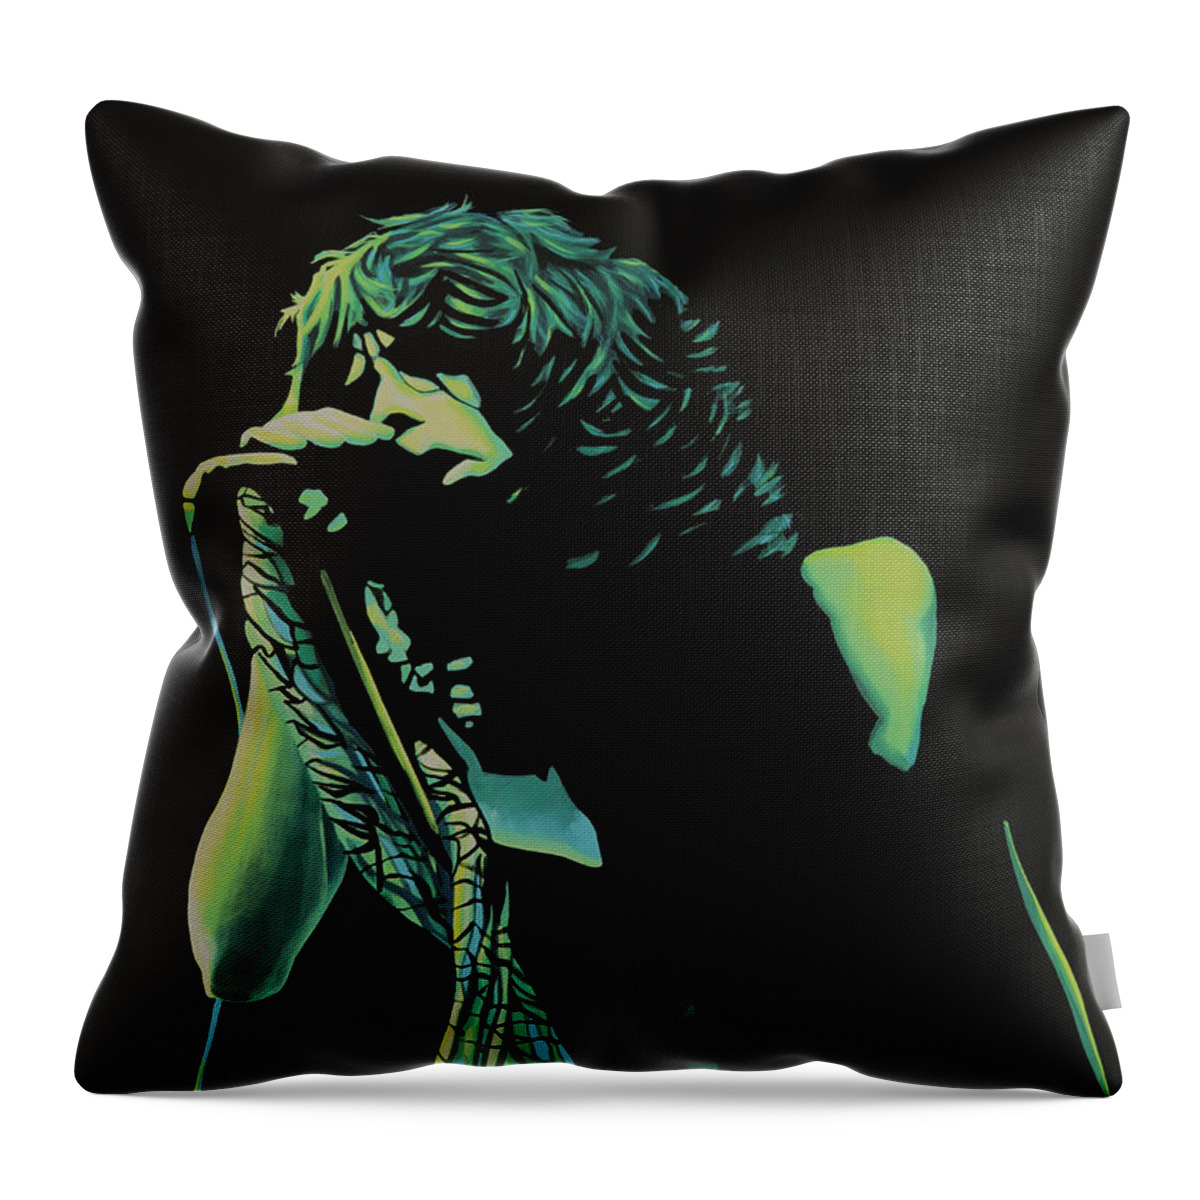 Steven Tyler Throw Pillow featuring the painting Steven Tyler 2 by Paul Meijering